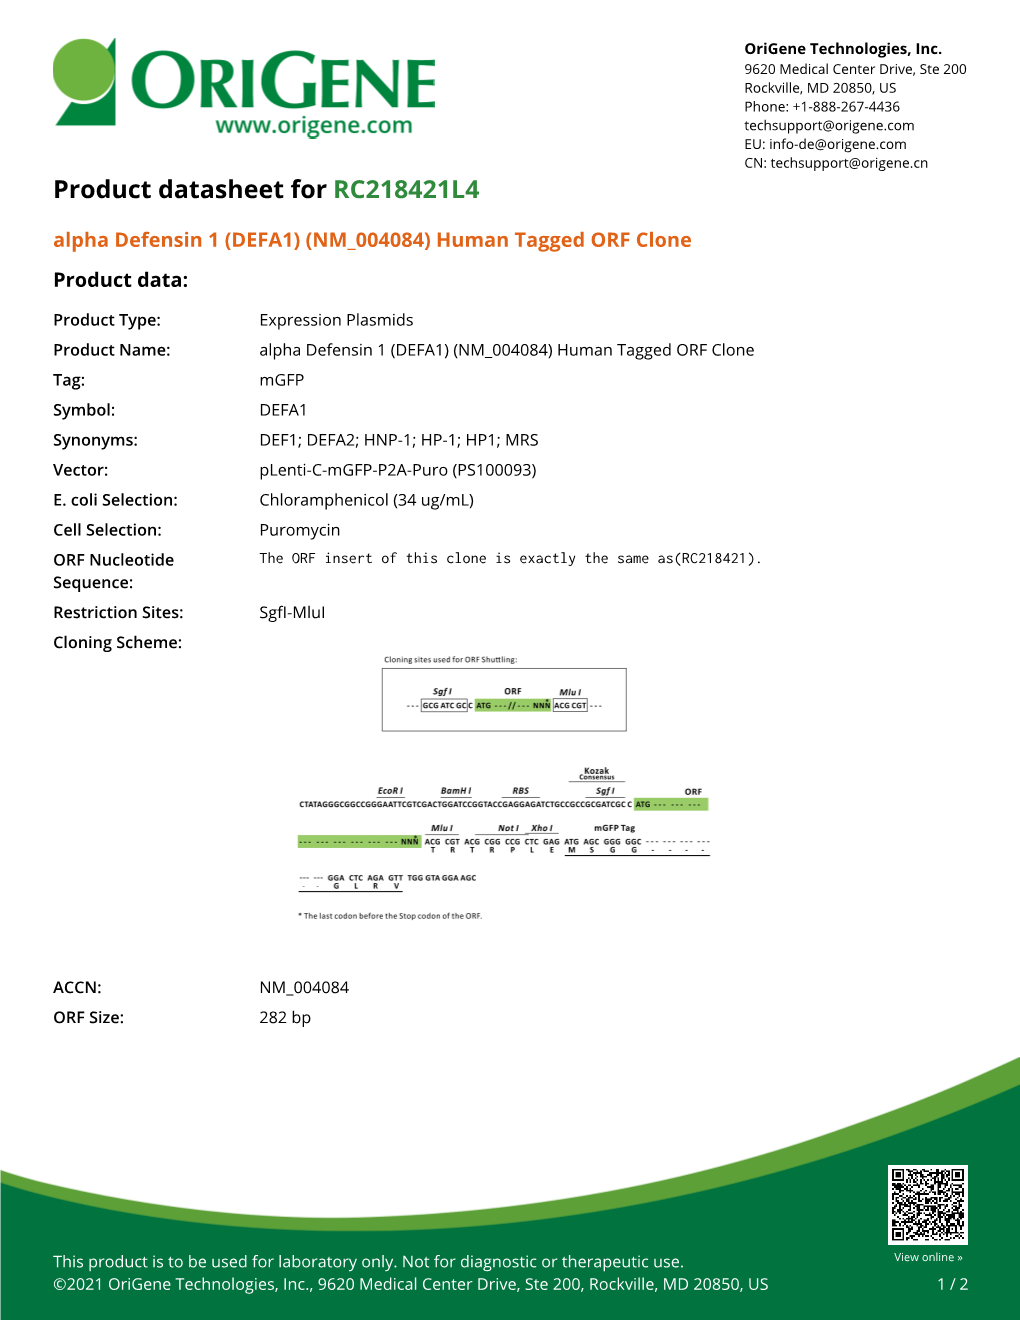 Alpha Defensin 1 (DEFA1) (NM 004084) Human Tagged ORF Clone Product Data